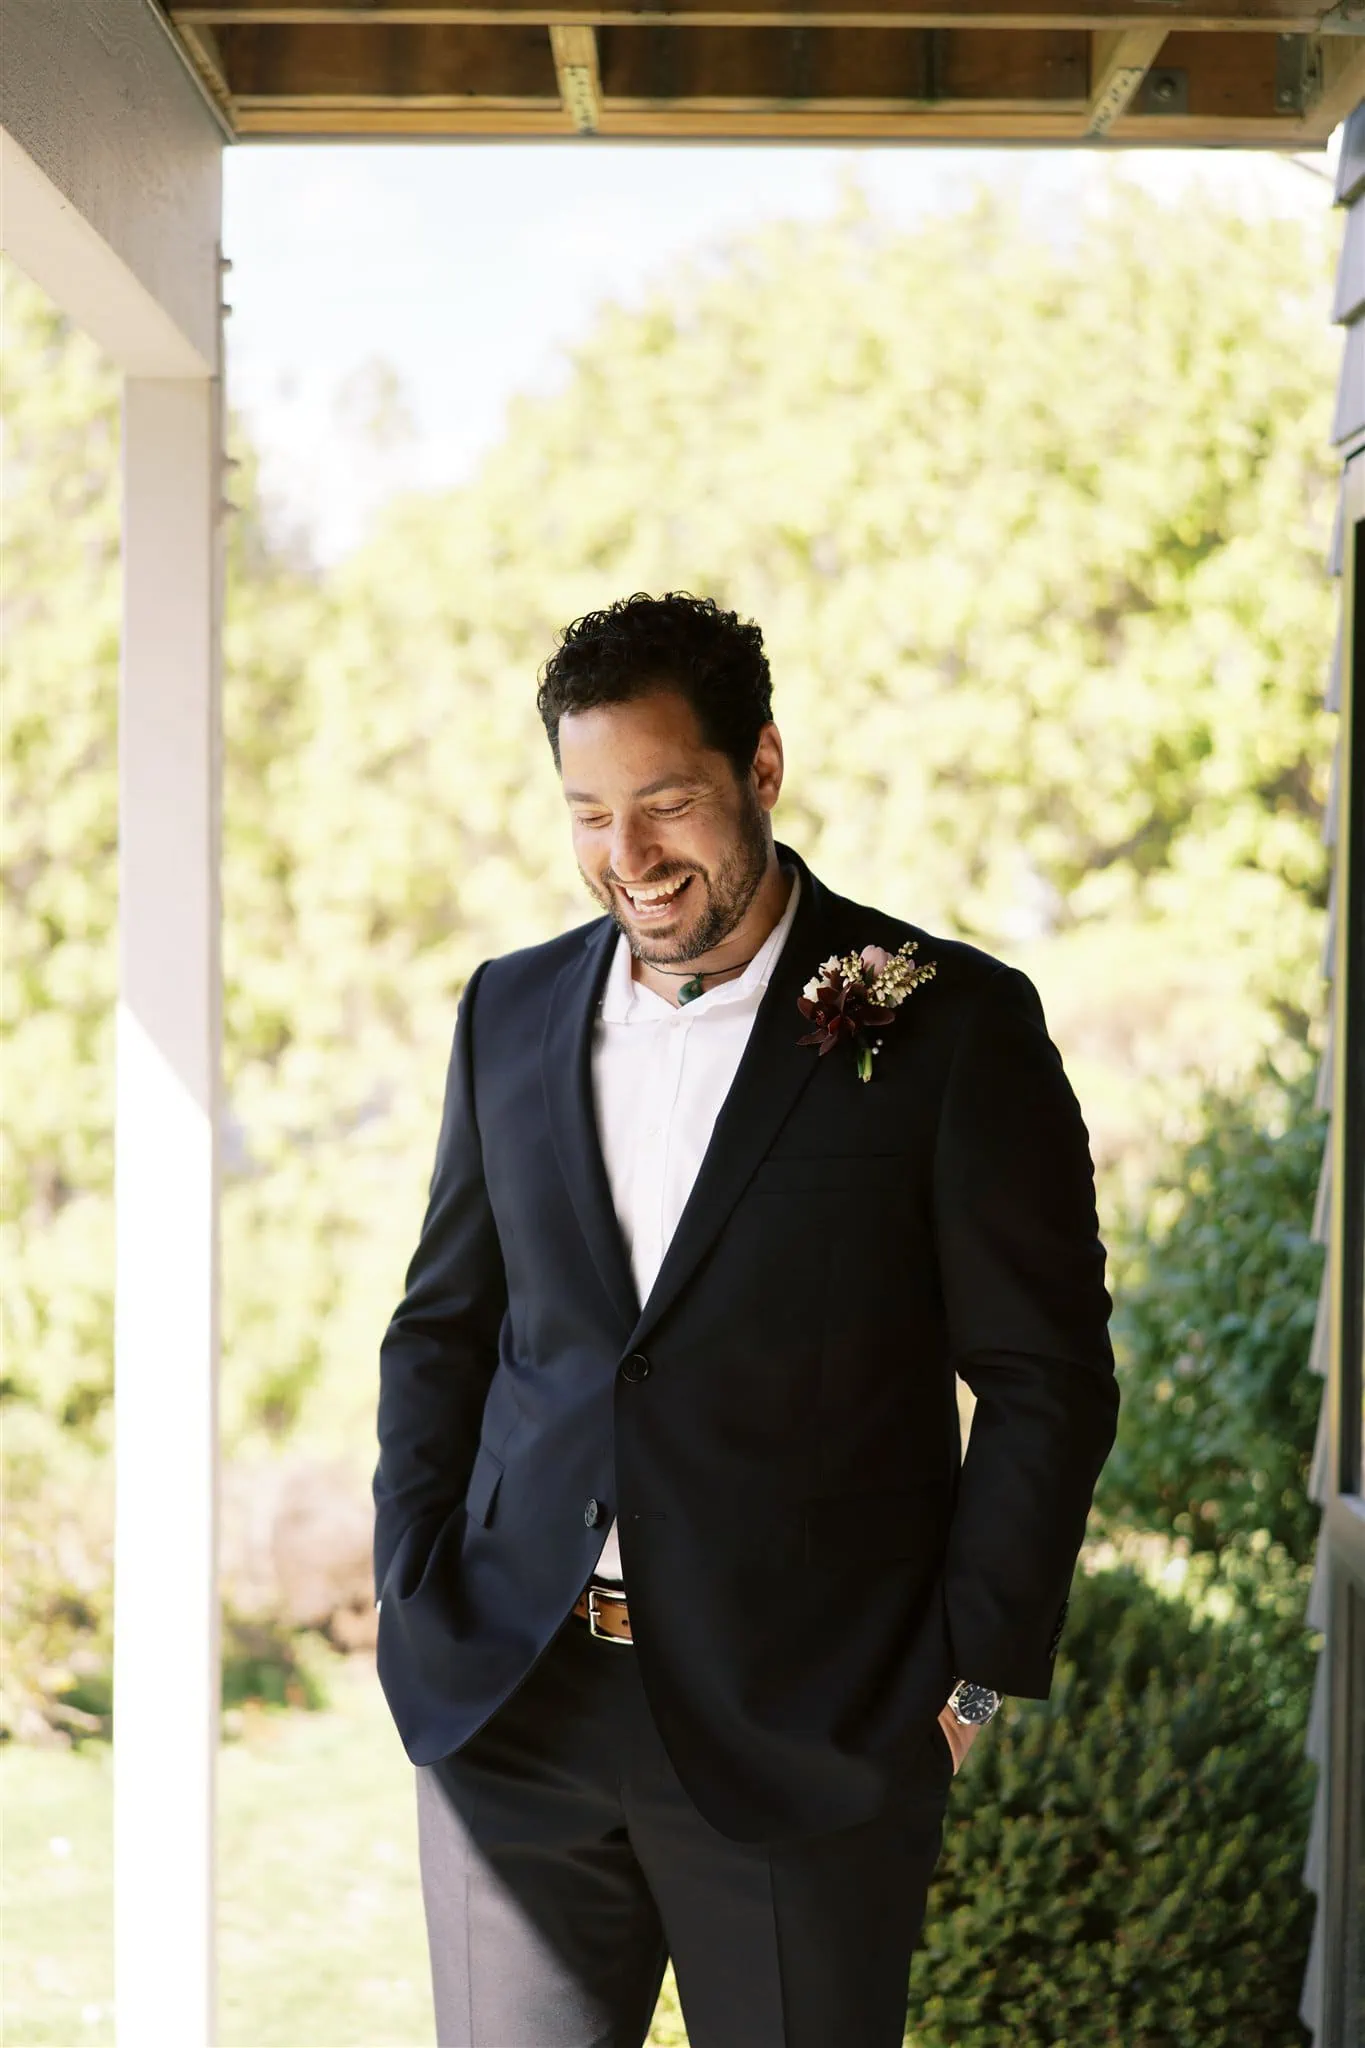 Queenstown New Zealand Elopement Wedding Photographer - A groom in a suit standing on a porch in Queenstown.